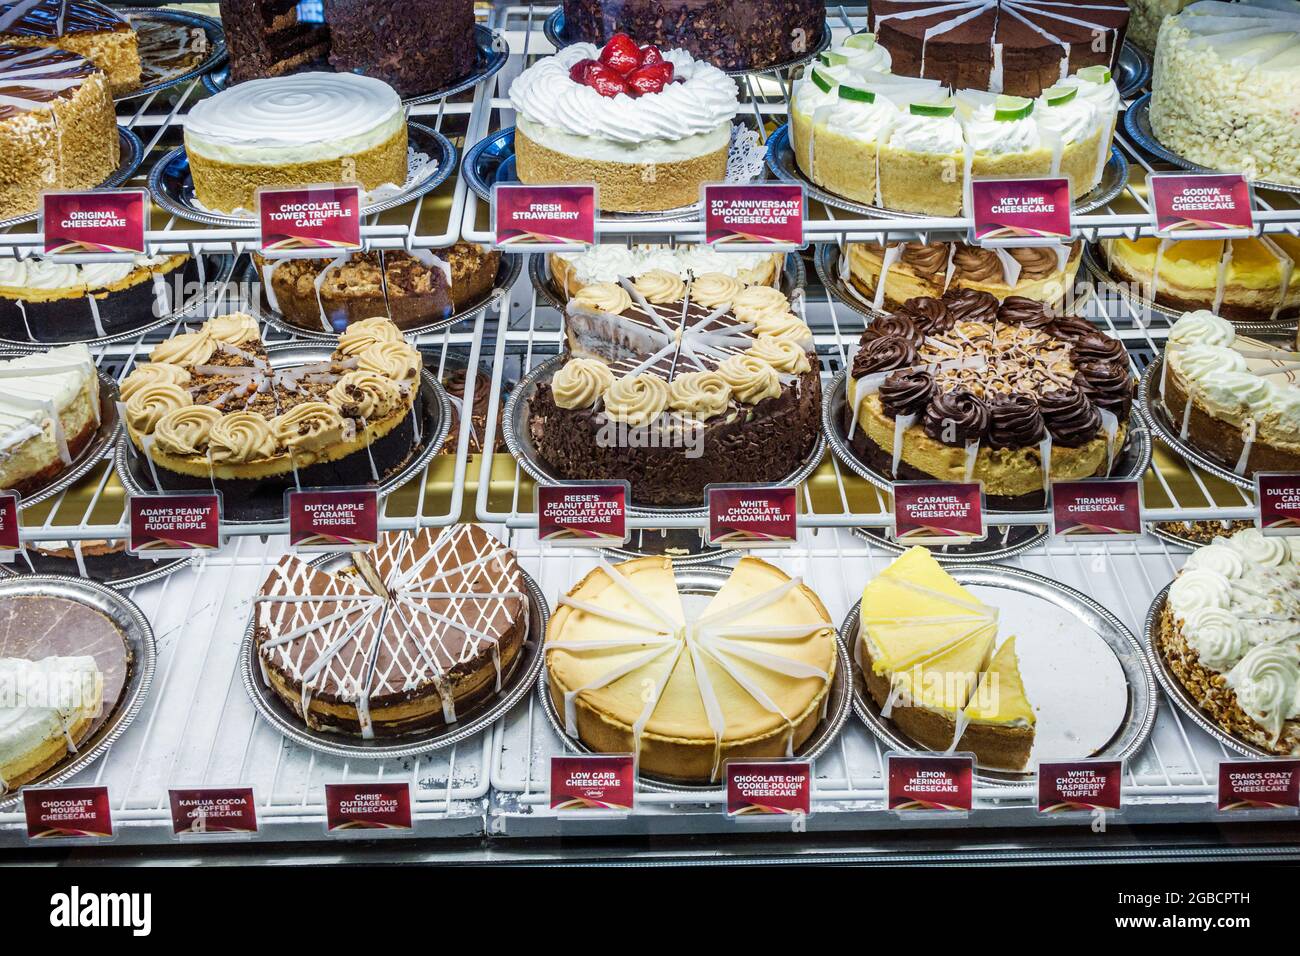 Florida Naples Coastland Center Shopping Mall,Cheesecake Factory restaurant display case cheesecake desserts chocolate sale, Stock Photo